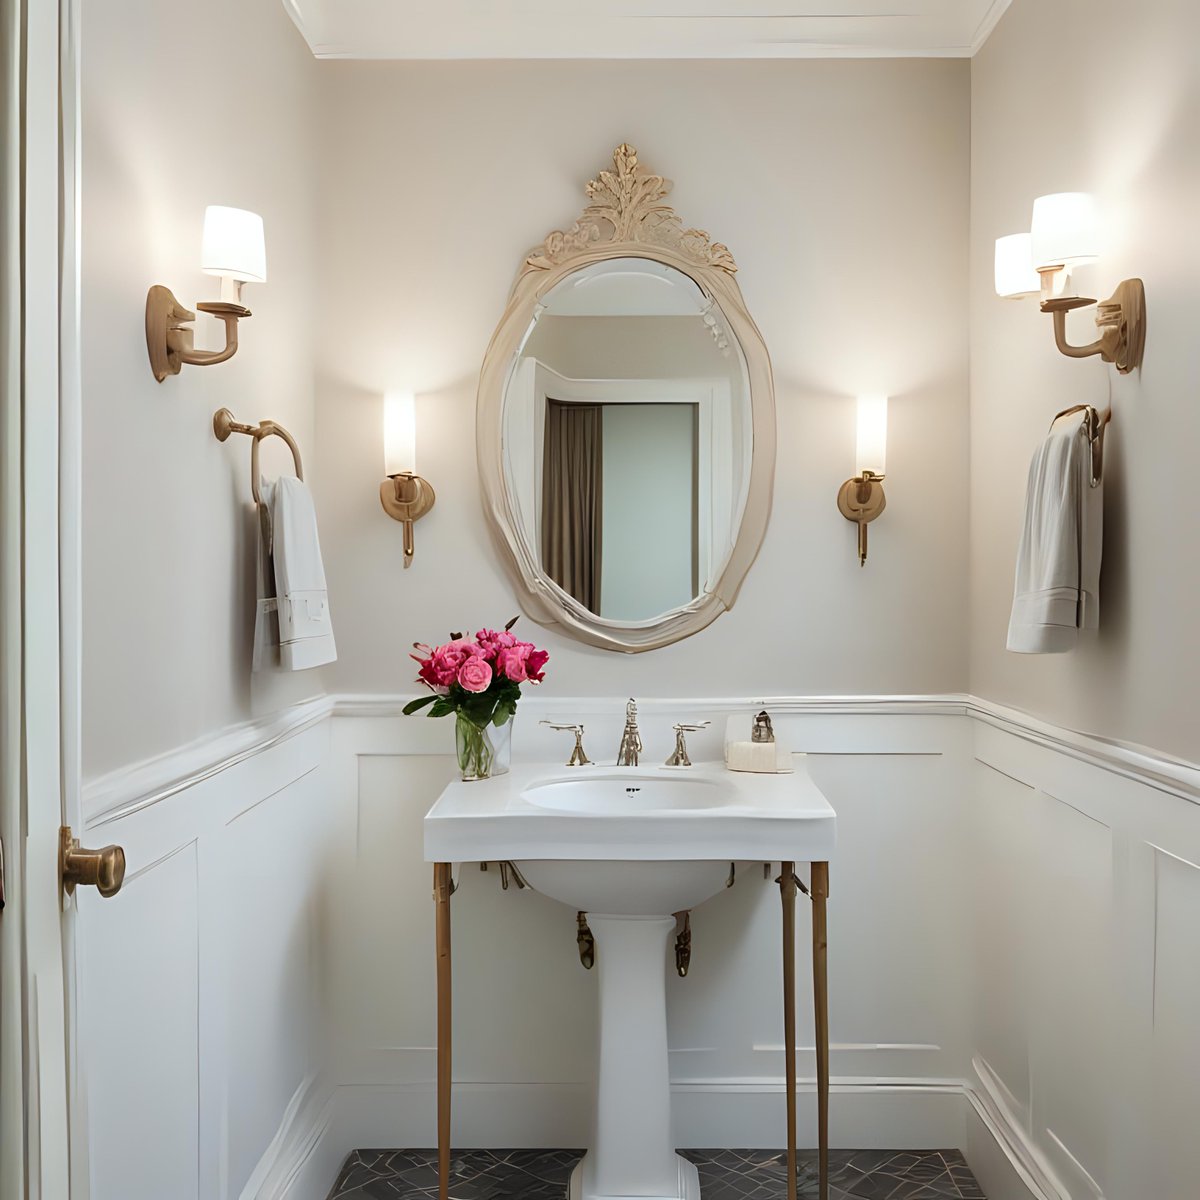 𝙒𝙝𝙖𝙩 𝙙𝙤 𝙮𝙤𝙪 𝙨𝙚𝙚 𝙬𝙝𝙚𝙣 𝙮𝙤𝙪 𝙖𝙧𝙚 𝙨𝙚𝙖𝙩𝙚𝙙 𝙞𝙣 𝙮𝙤𝙪𝙧 𝙩𝙤𝙞𝙡𝙚𝙩?

#wc #bathroom #bathroomdesign #homedecor #interiordesign #bathroominspiration